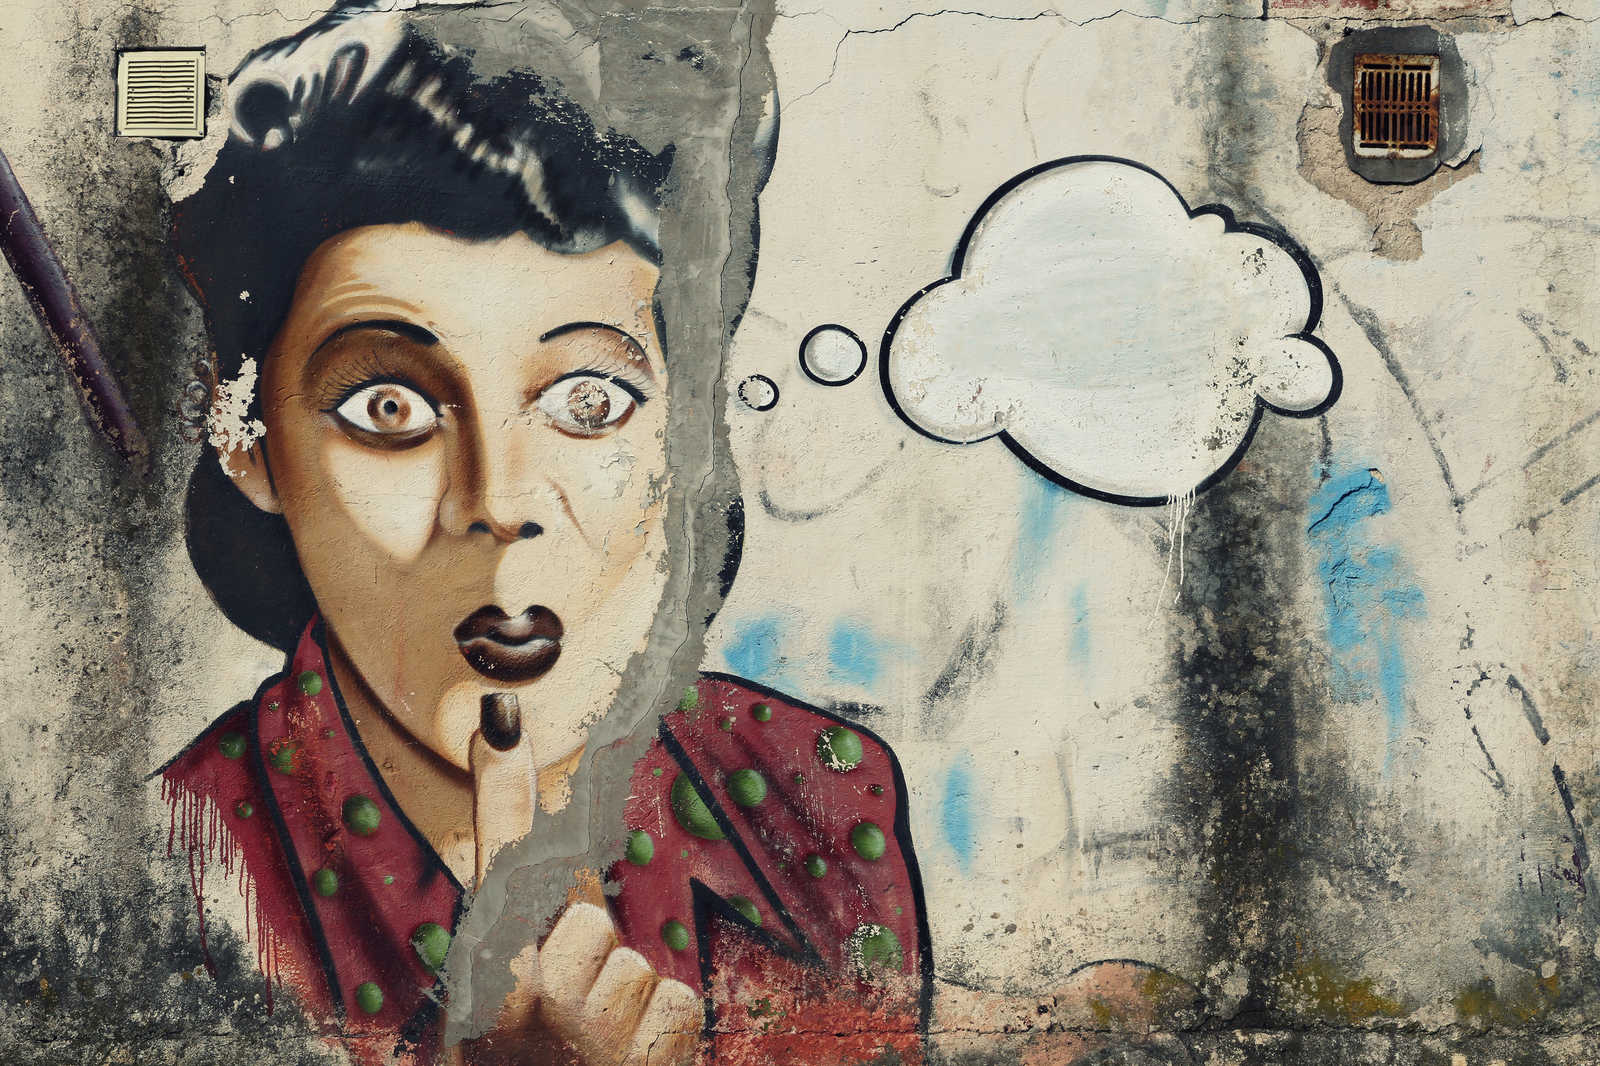             Leinwandbild Frau mit Gedankenblase als Graffiti auf Steinwand – 0,90 m x 0,60 m
        